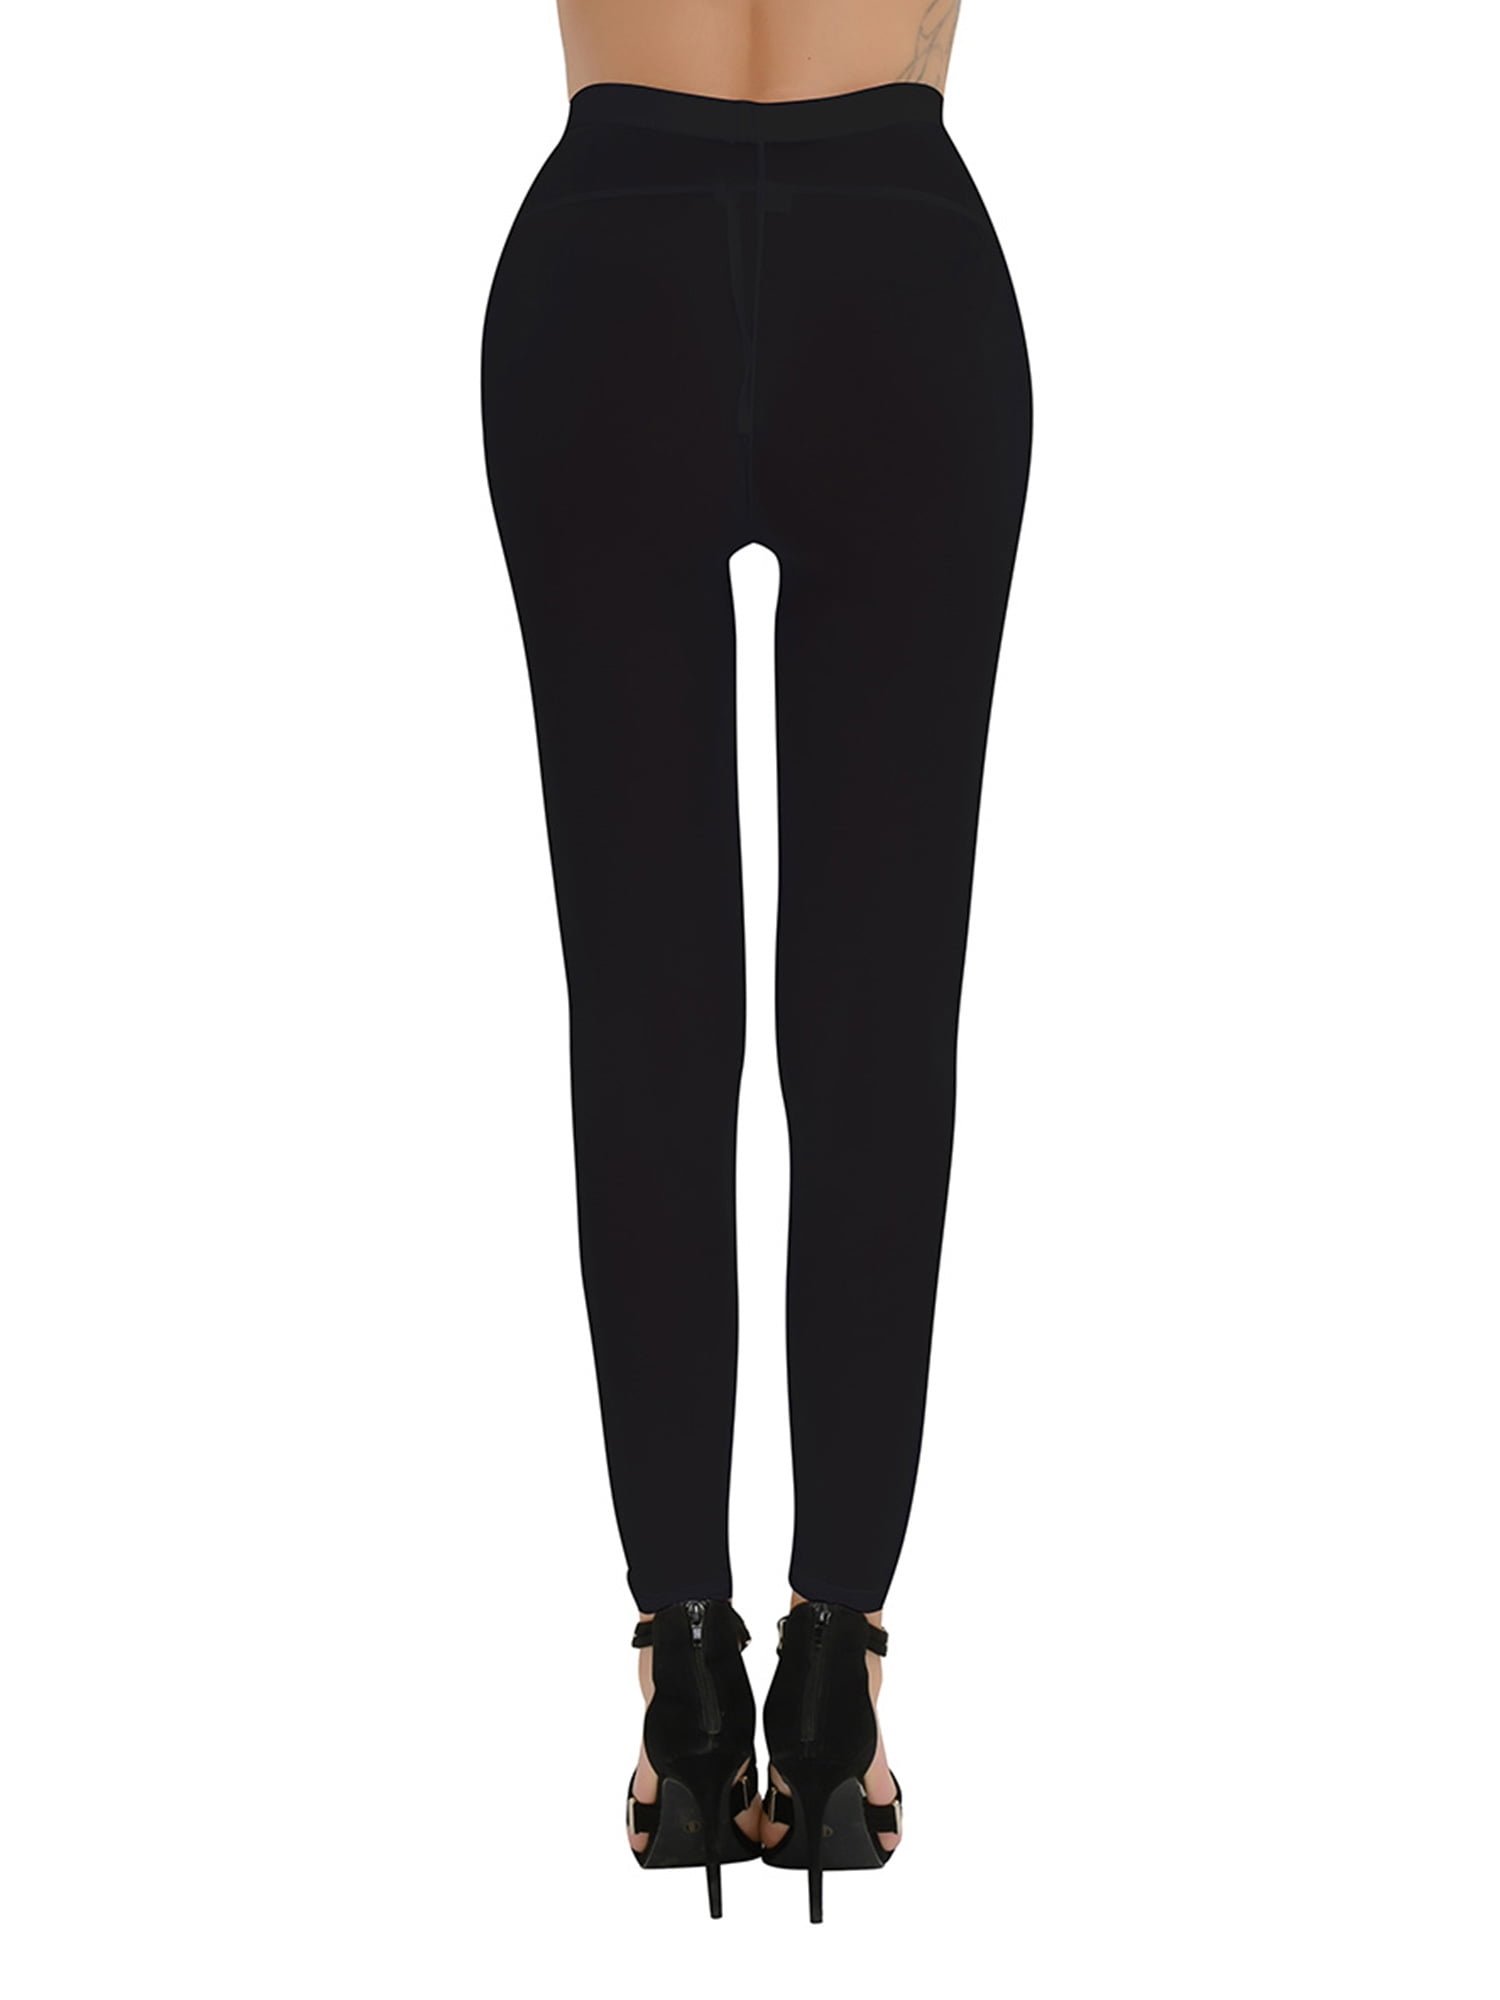 YIWEI Women Sheer Leggings Zipper Open Crotch Silky Skinny Trousers Stretch  Tight Pant Black